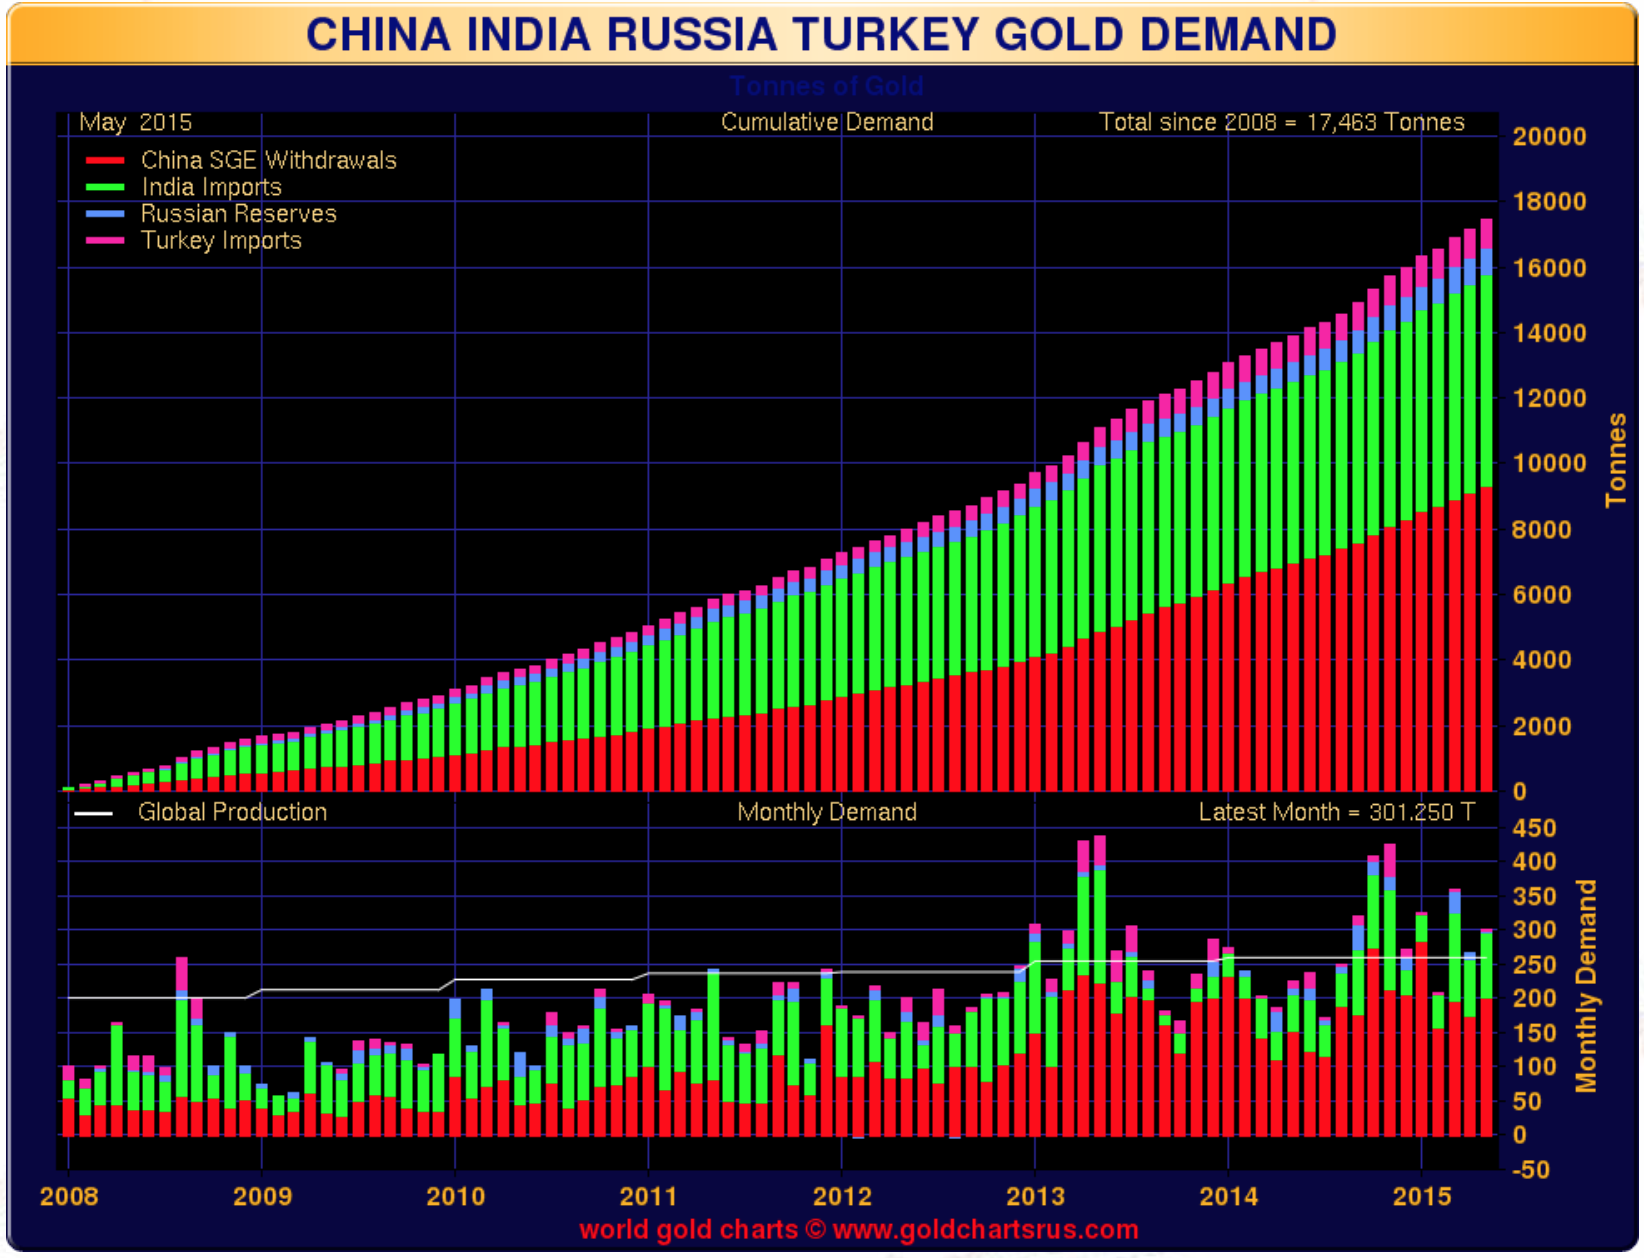 Demande d'or -Chine Inde Russie et Turquie